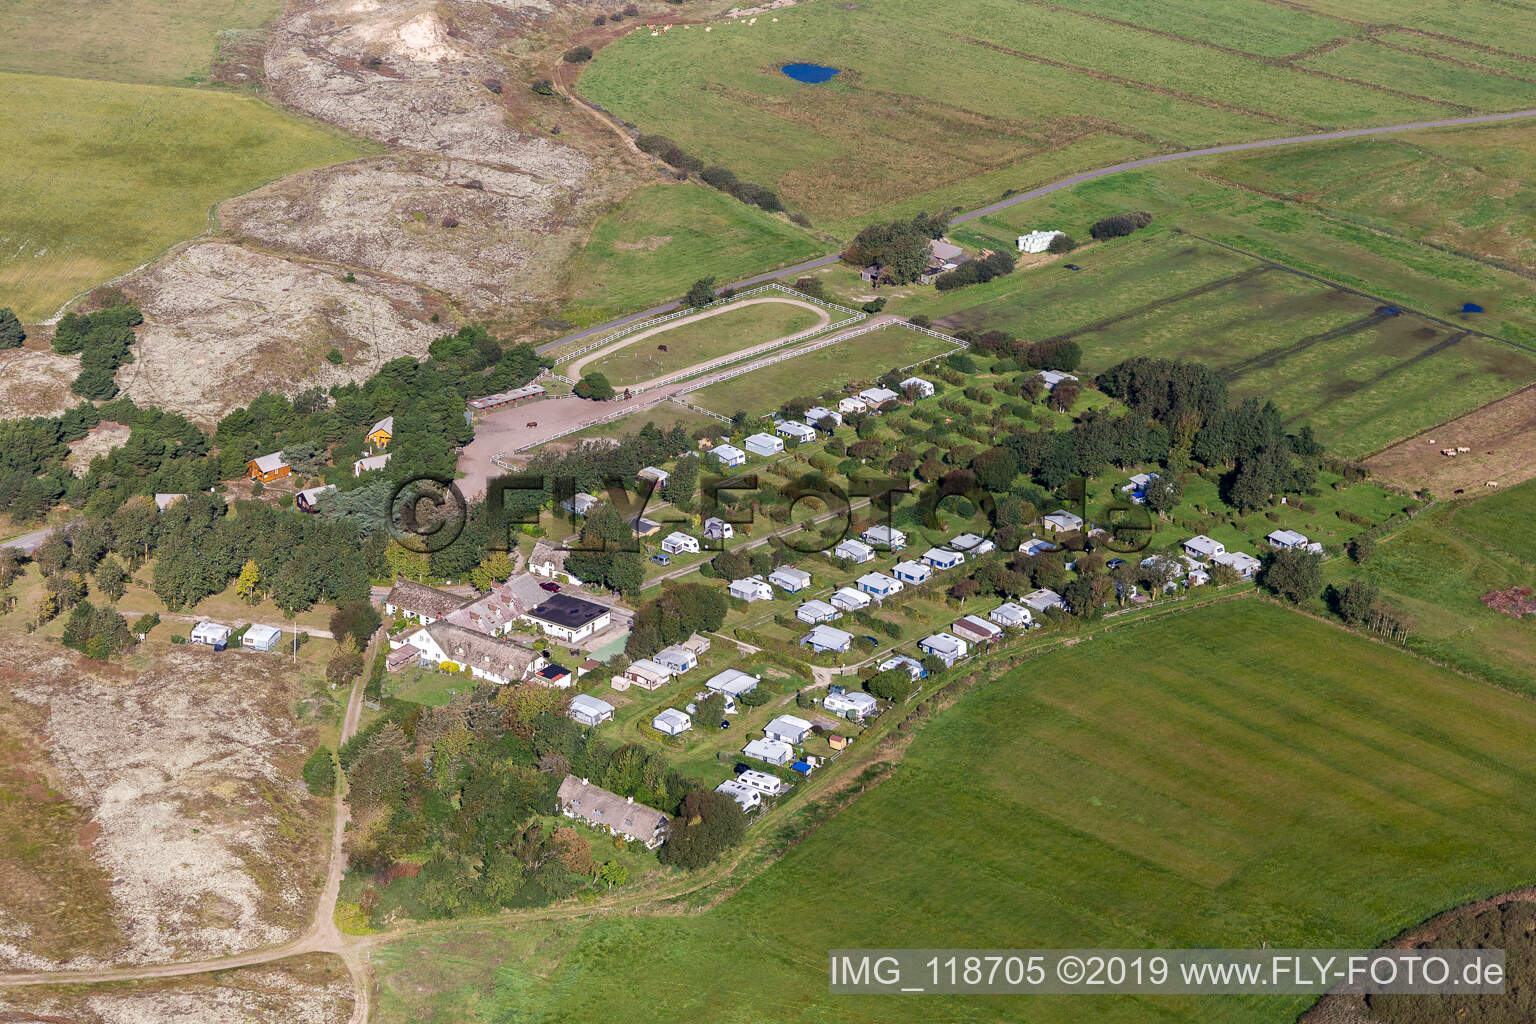 Luftbild von Sønderho Ny Camping im Bundesland Syddanmark, Dänemark